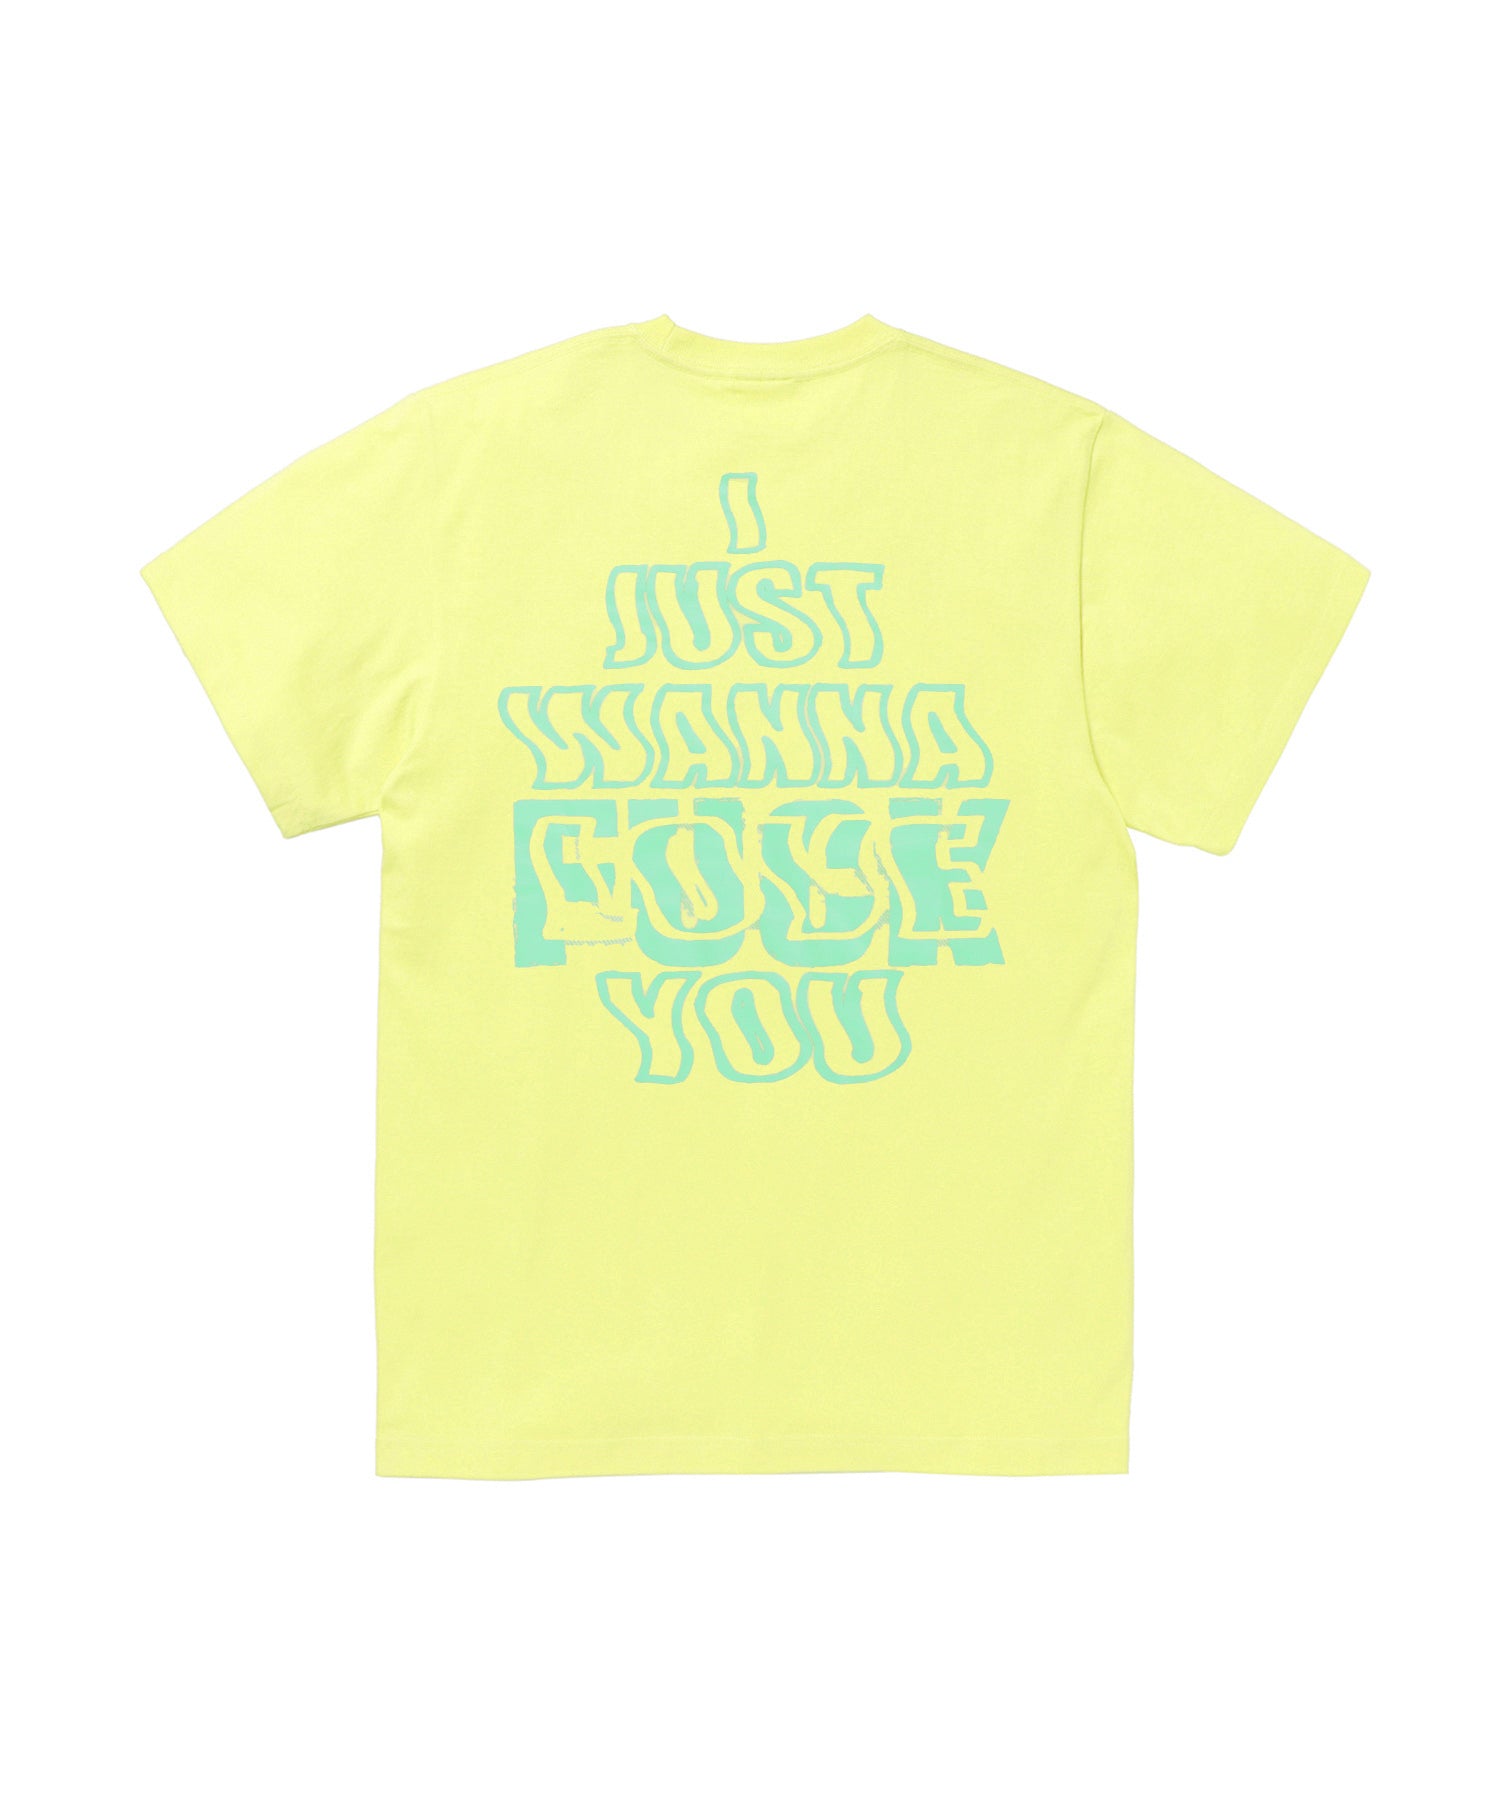 FR2 LOVE or FXXK Tシャツ Lサイズ 完売色